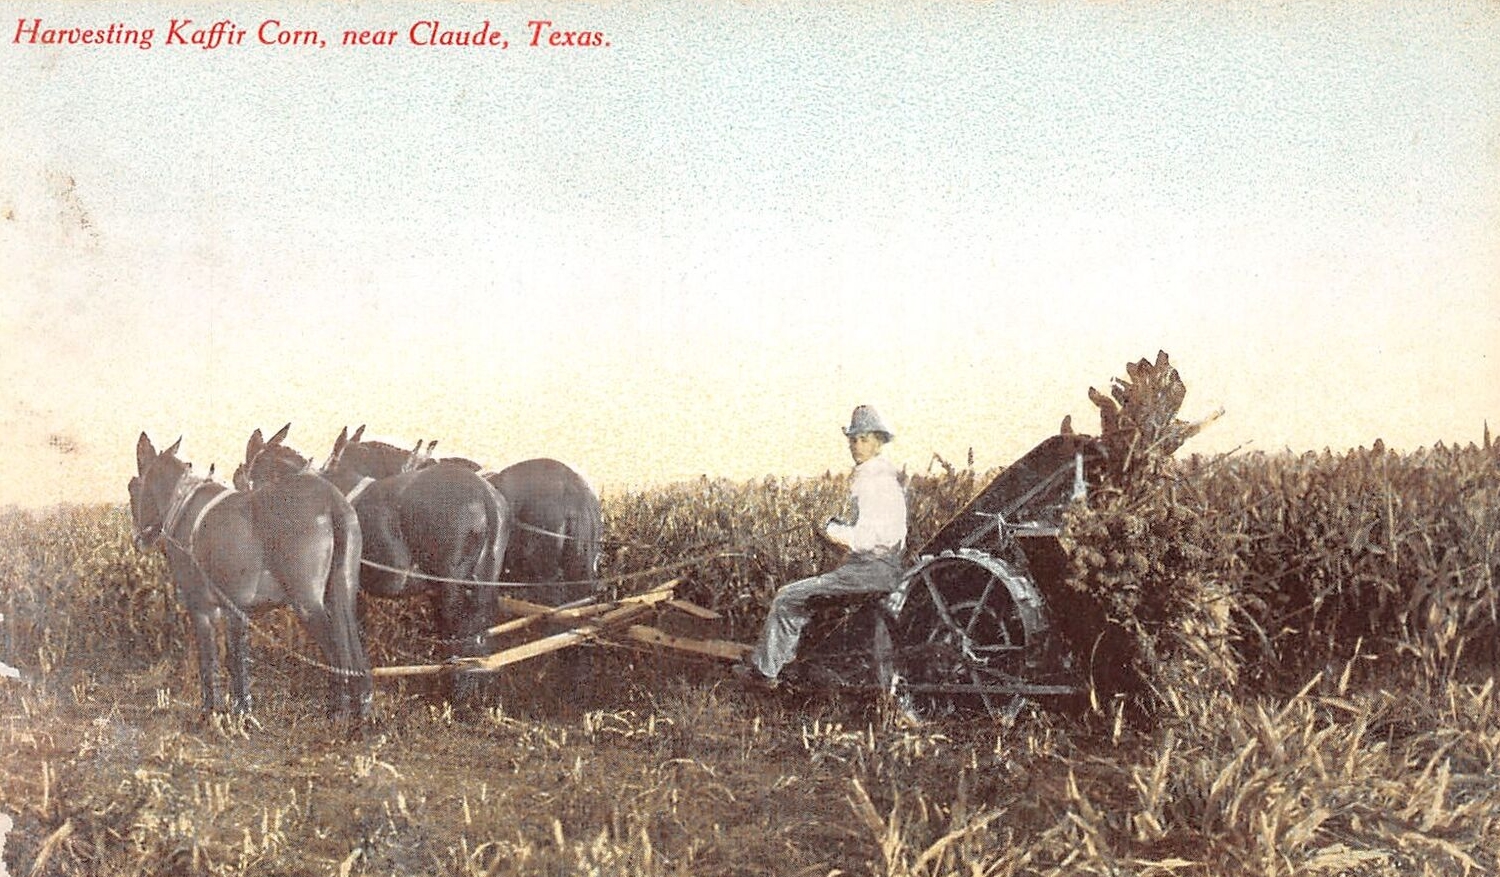 Harvesting Kaffir Corn Near Claude in 1910